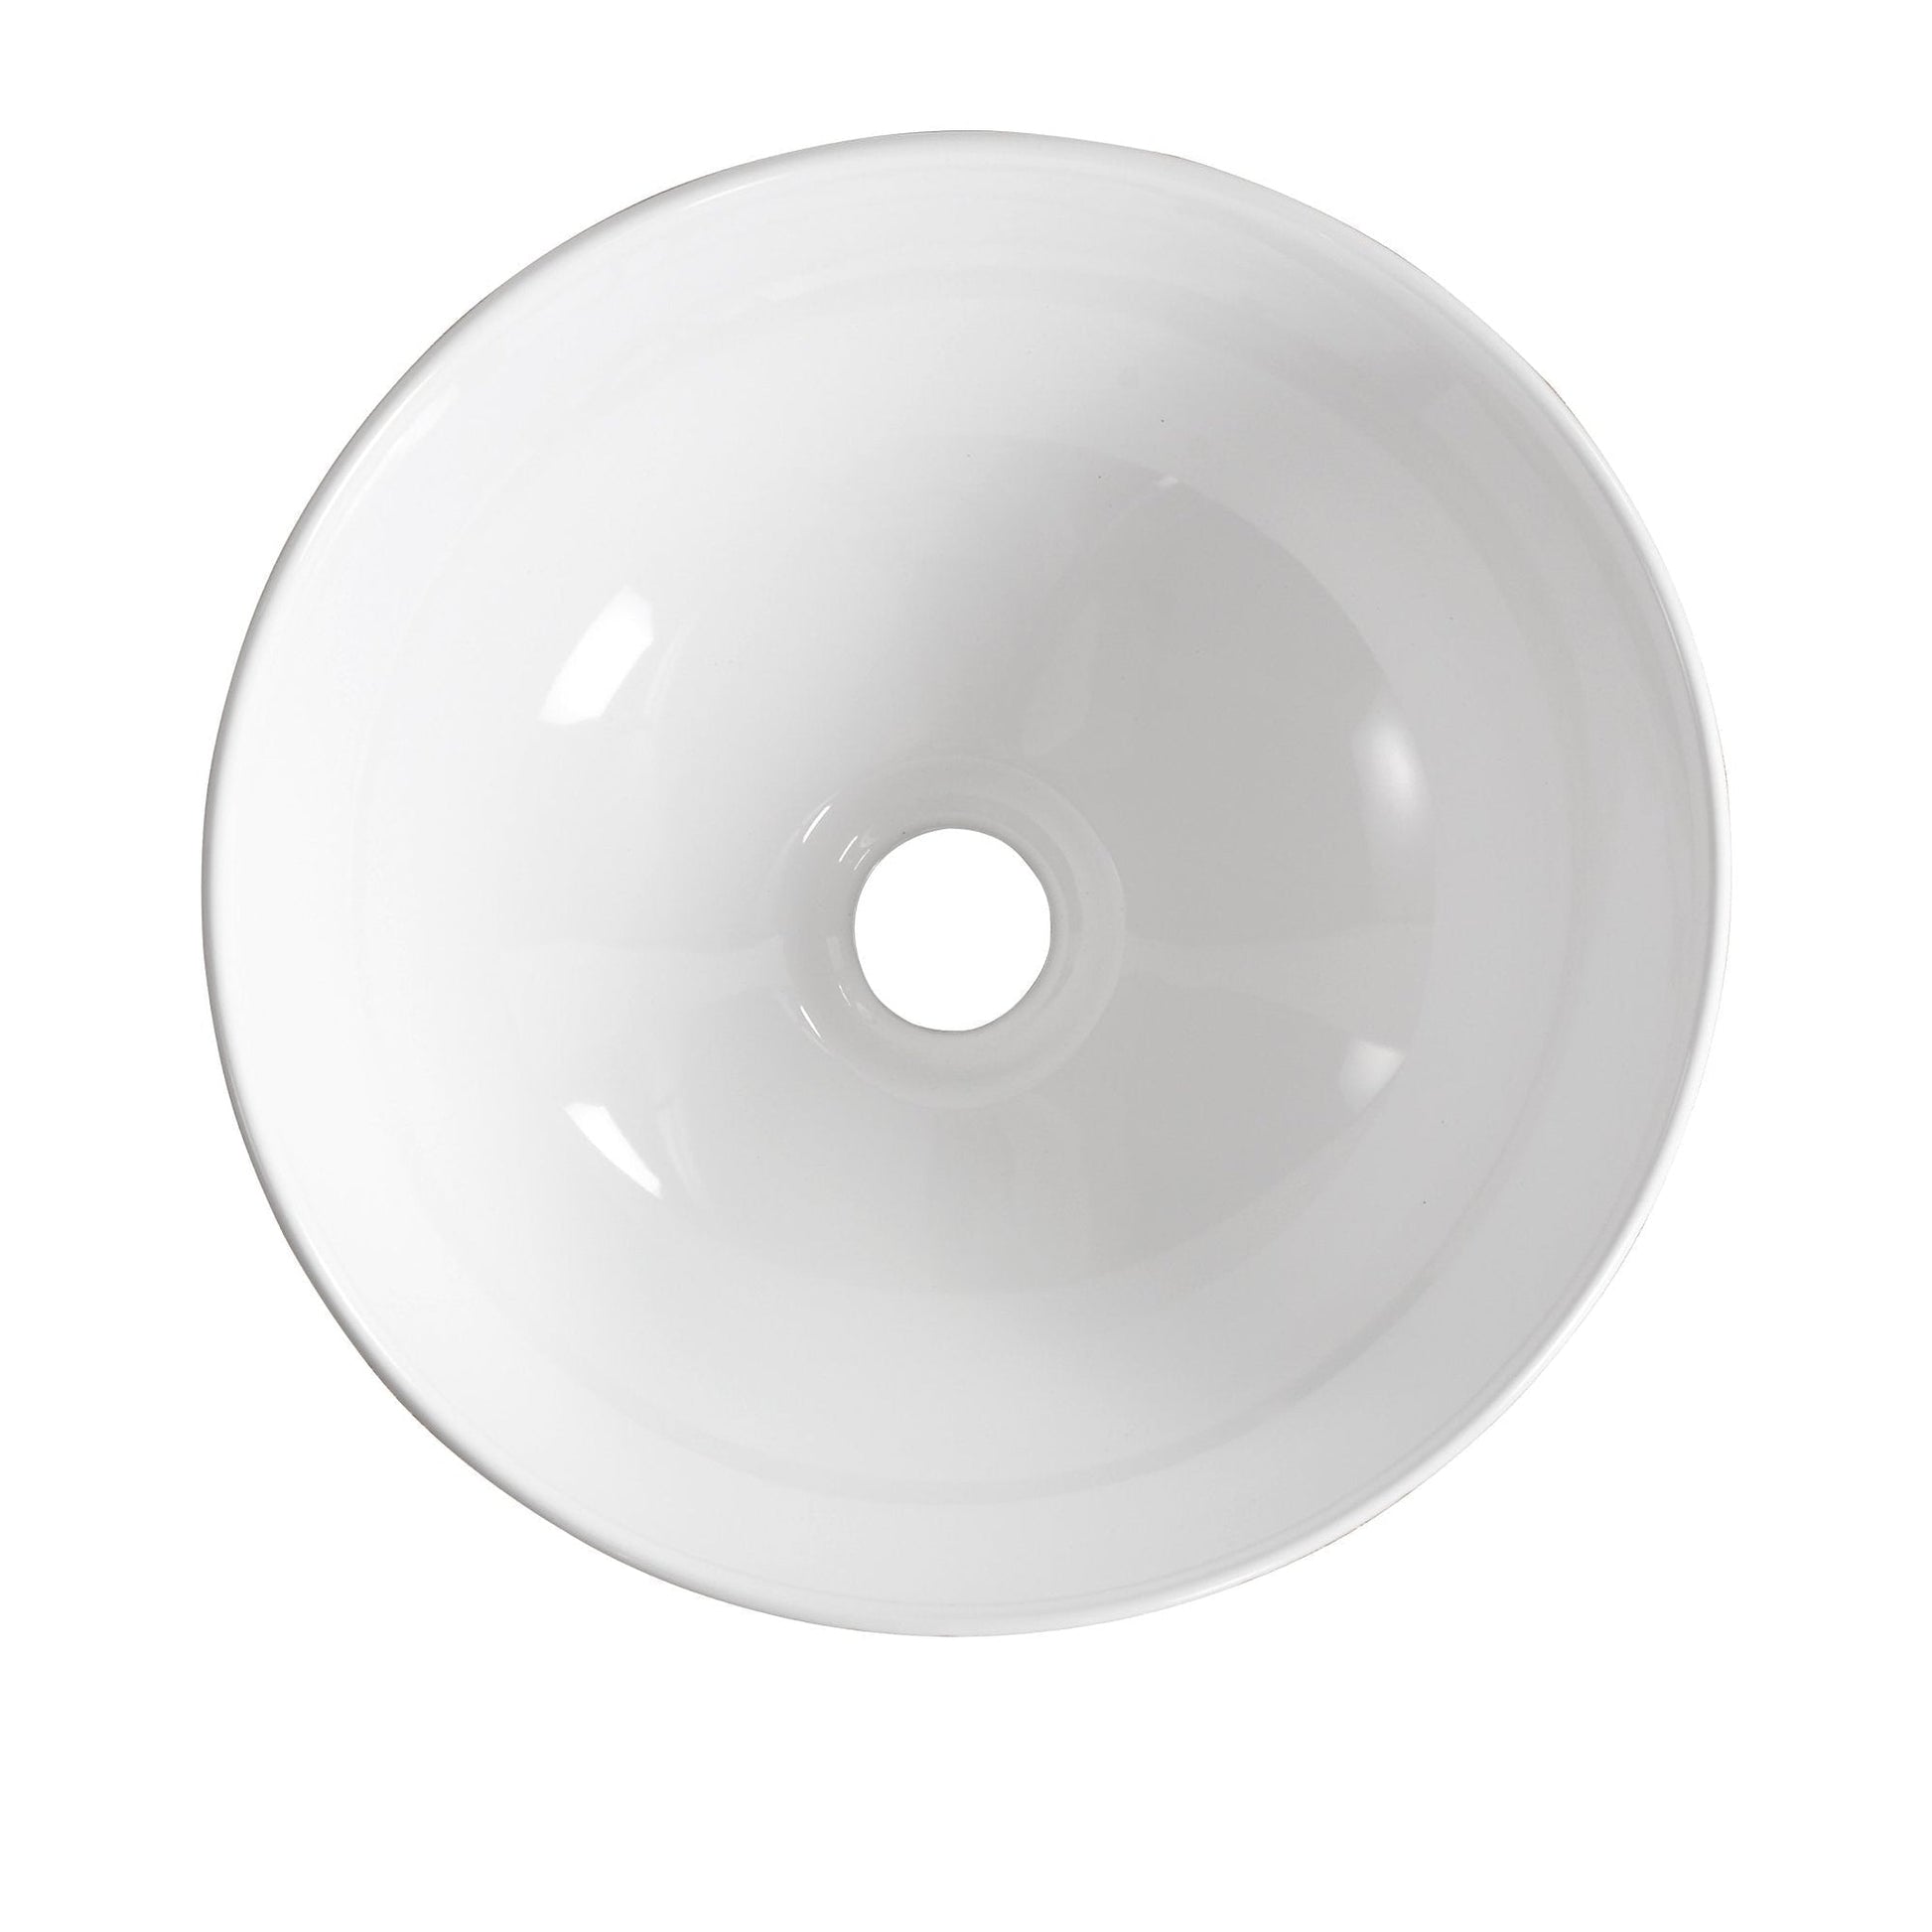 DeerValley DV-1V061 13" x 13" x 5.5" White Round Ceramic Vessel Sink